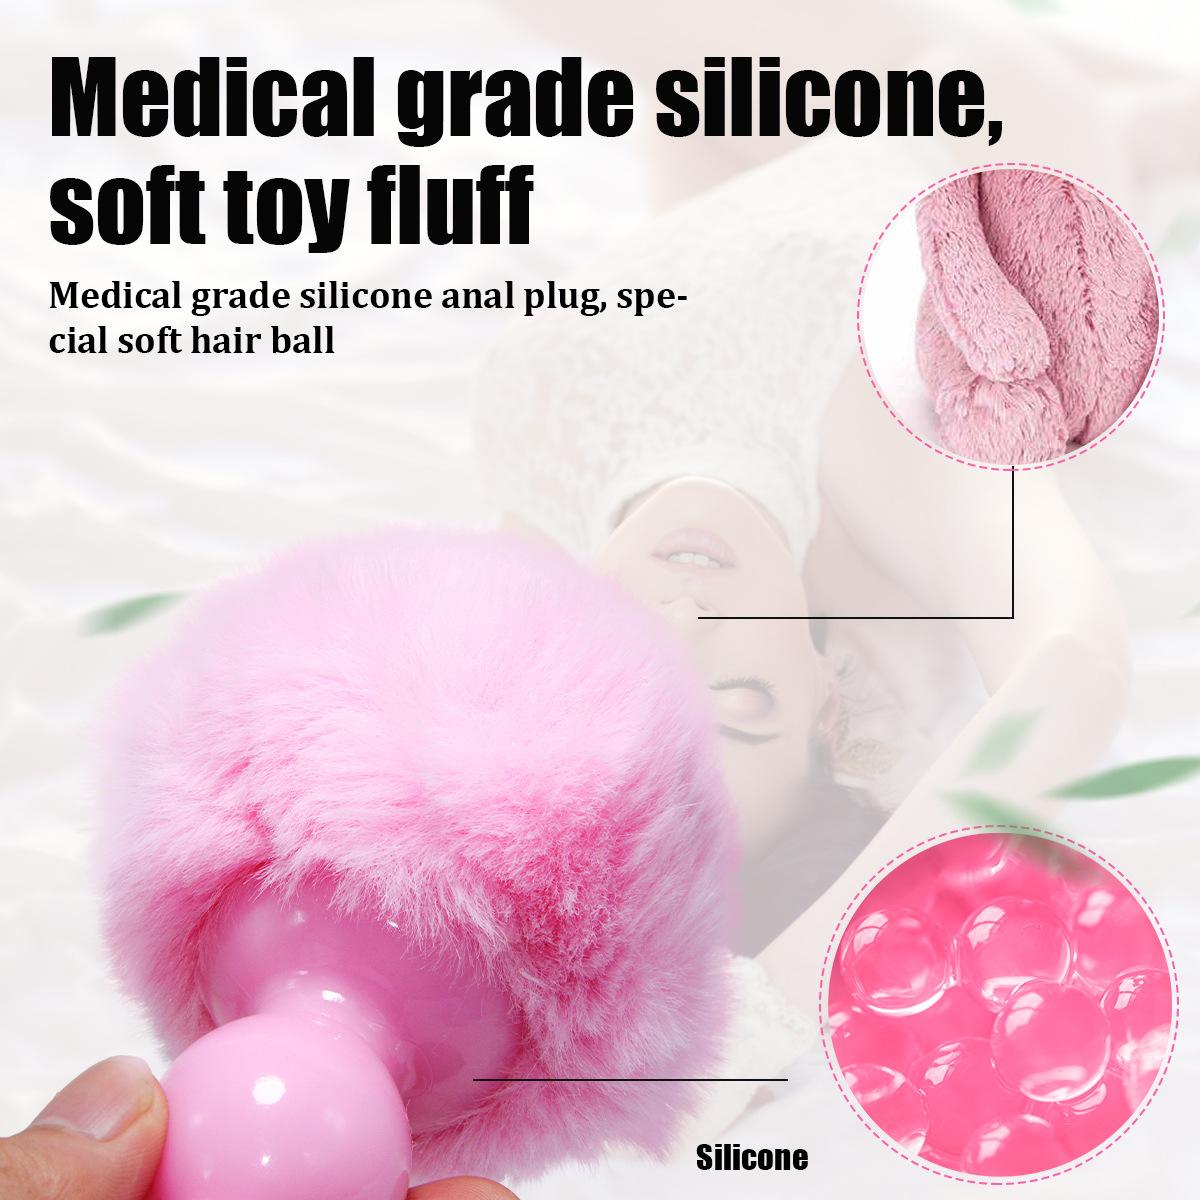 Soft glue, hairy ball, anal plug ap-30